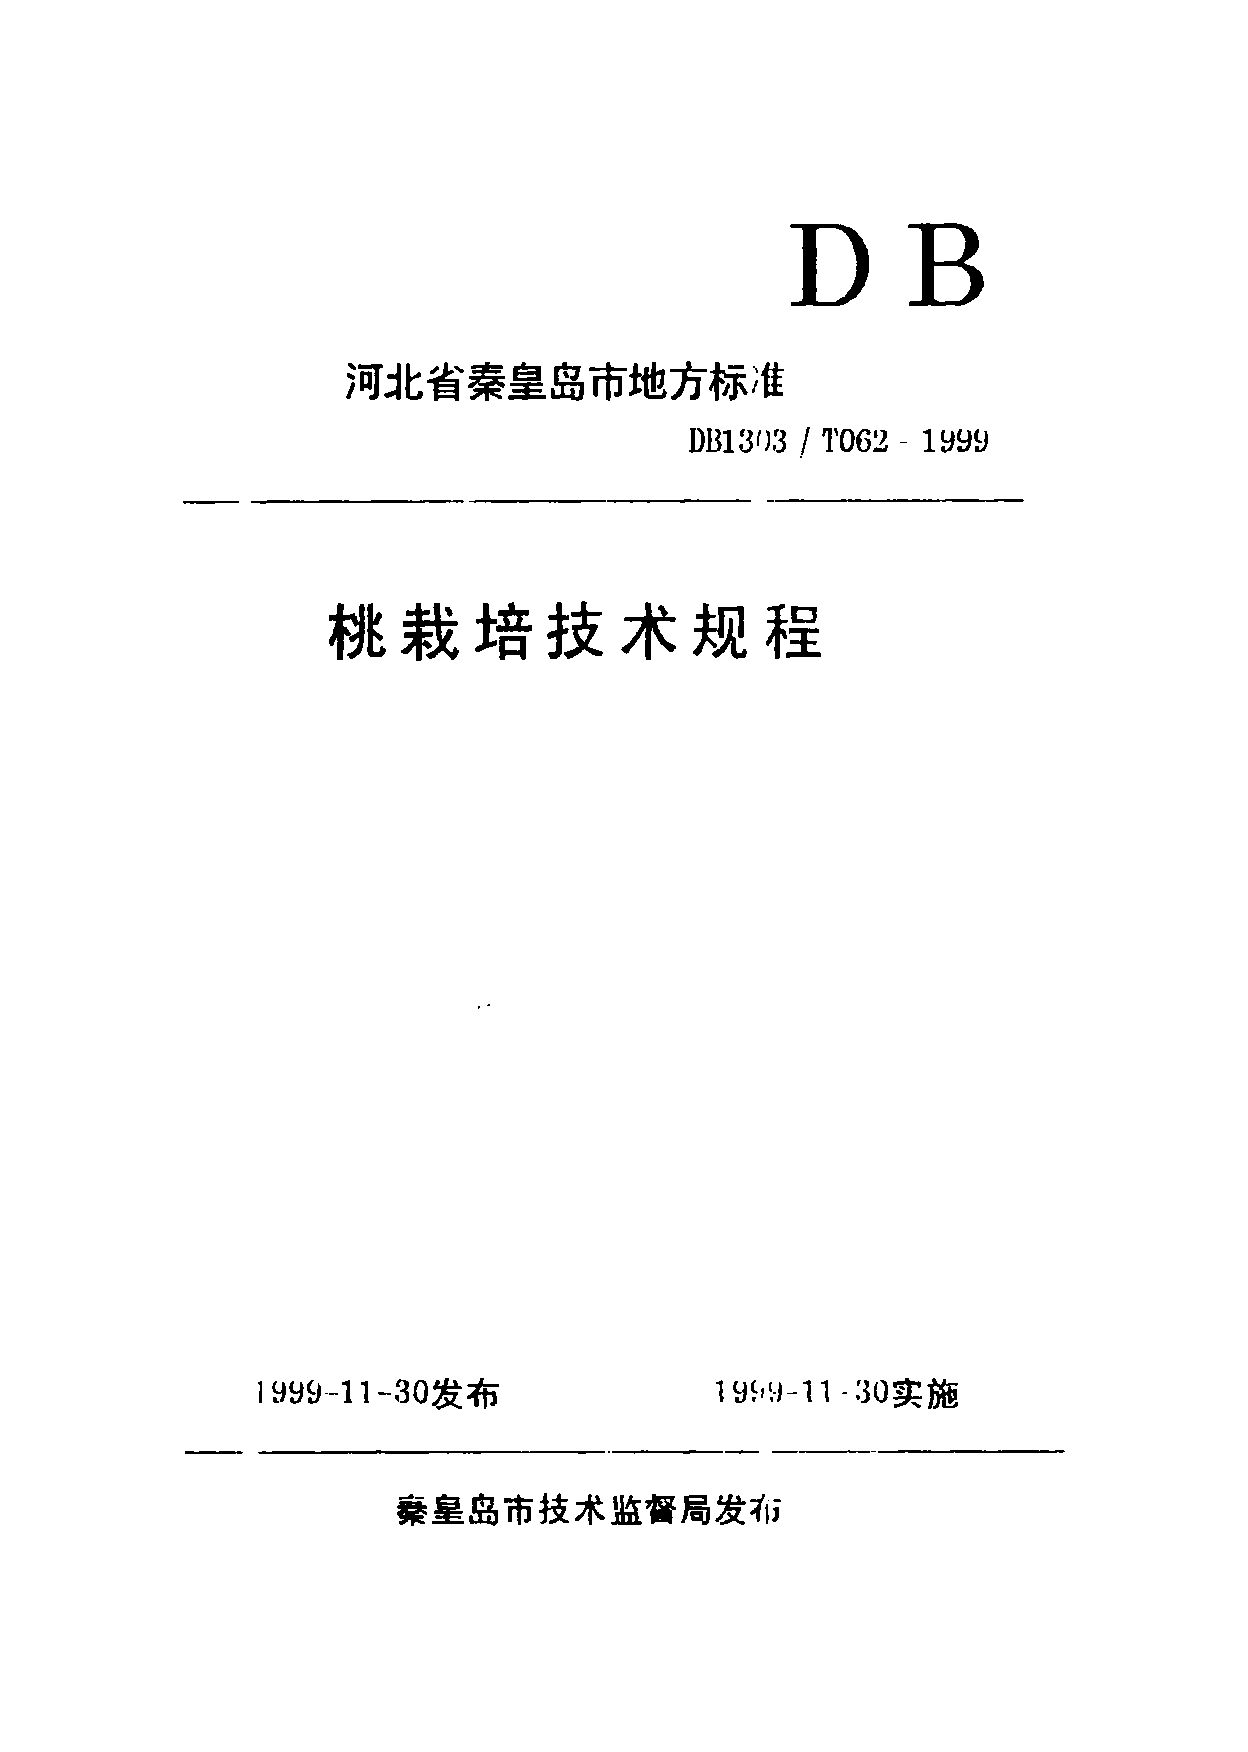 DB1303/T 062-1999